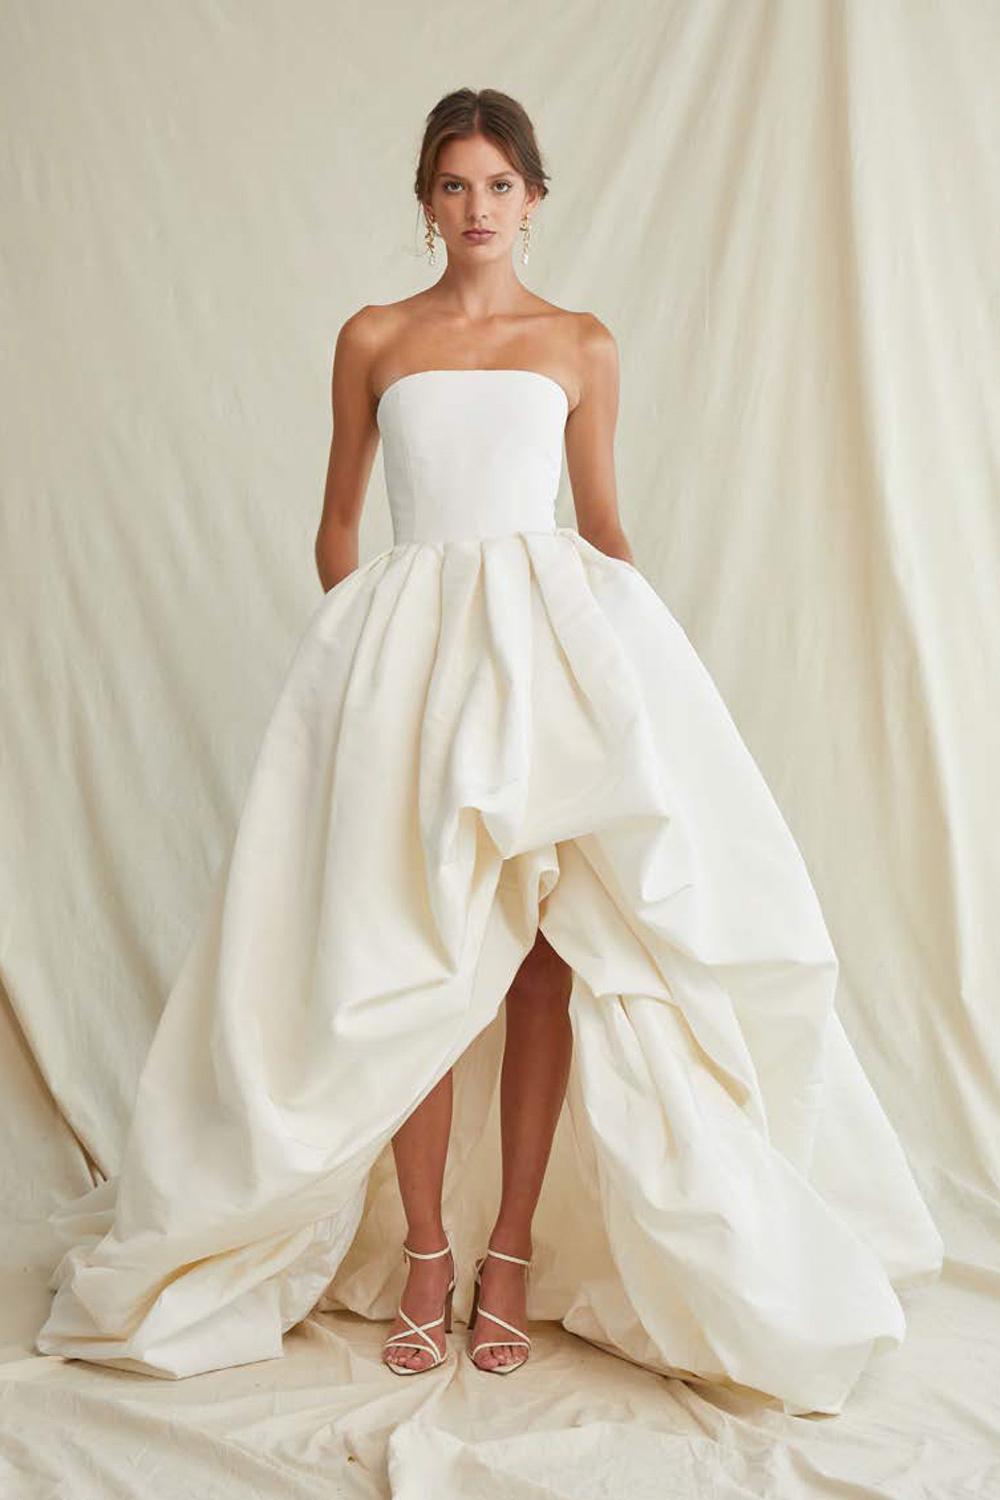 Elegant Short Wedding Dresses for Every Bride